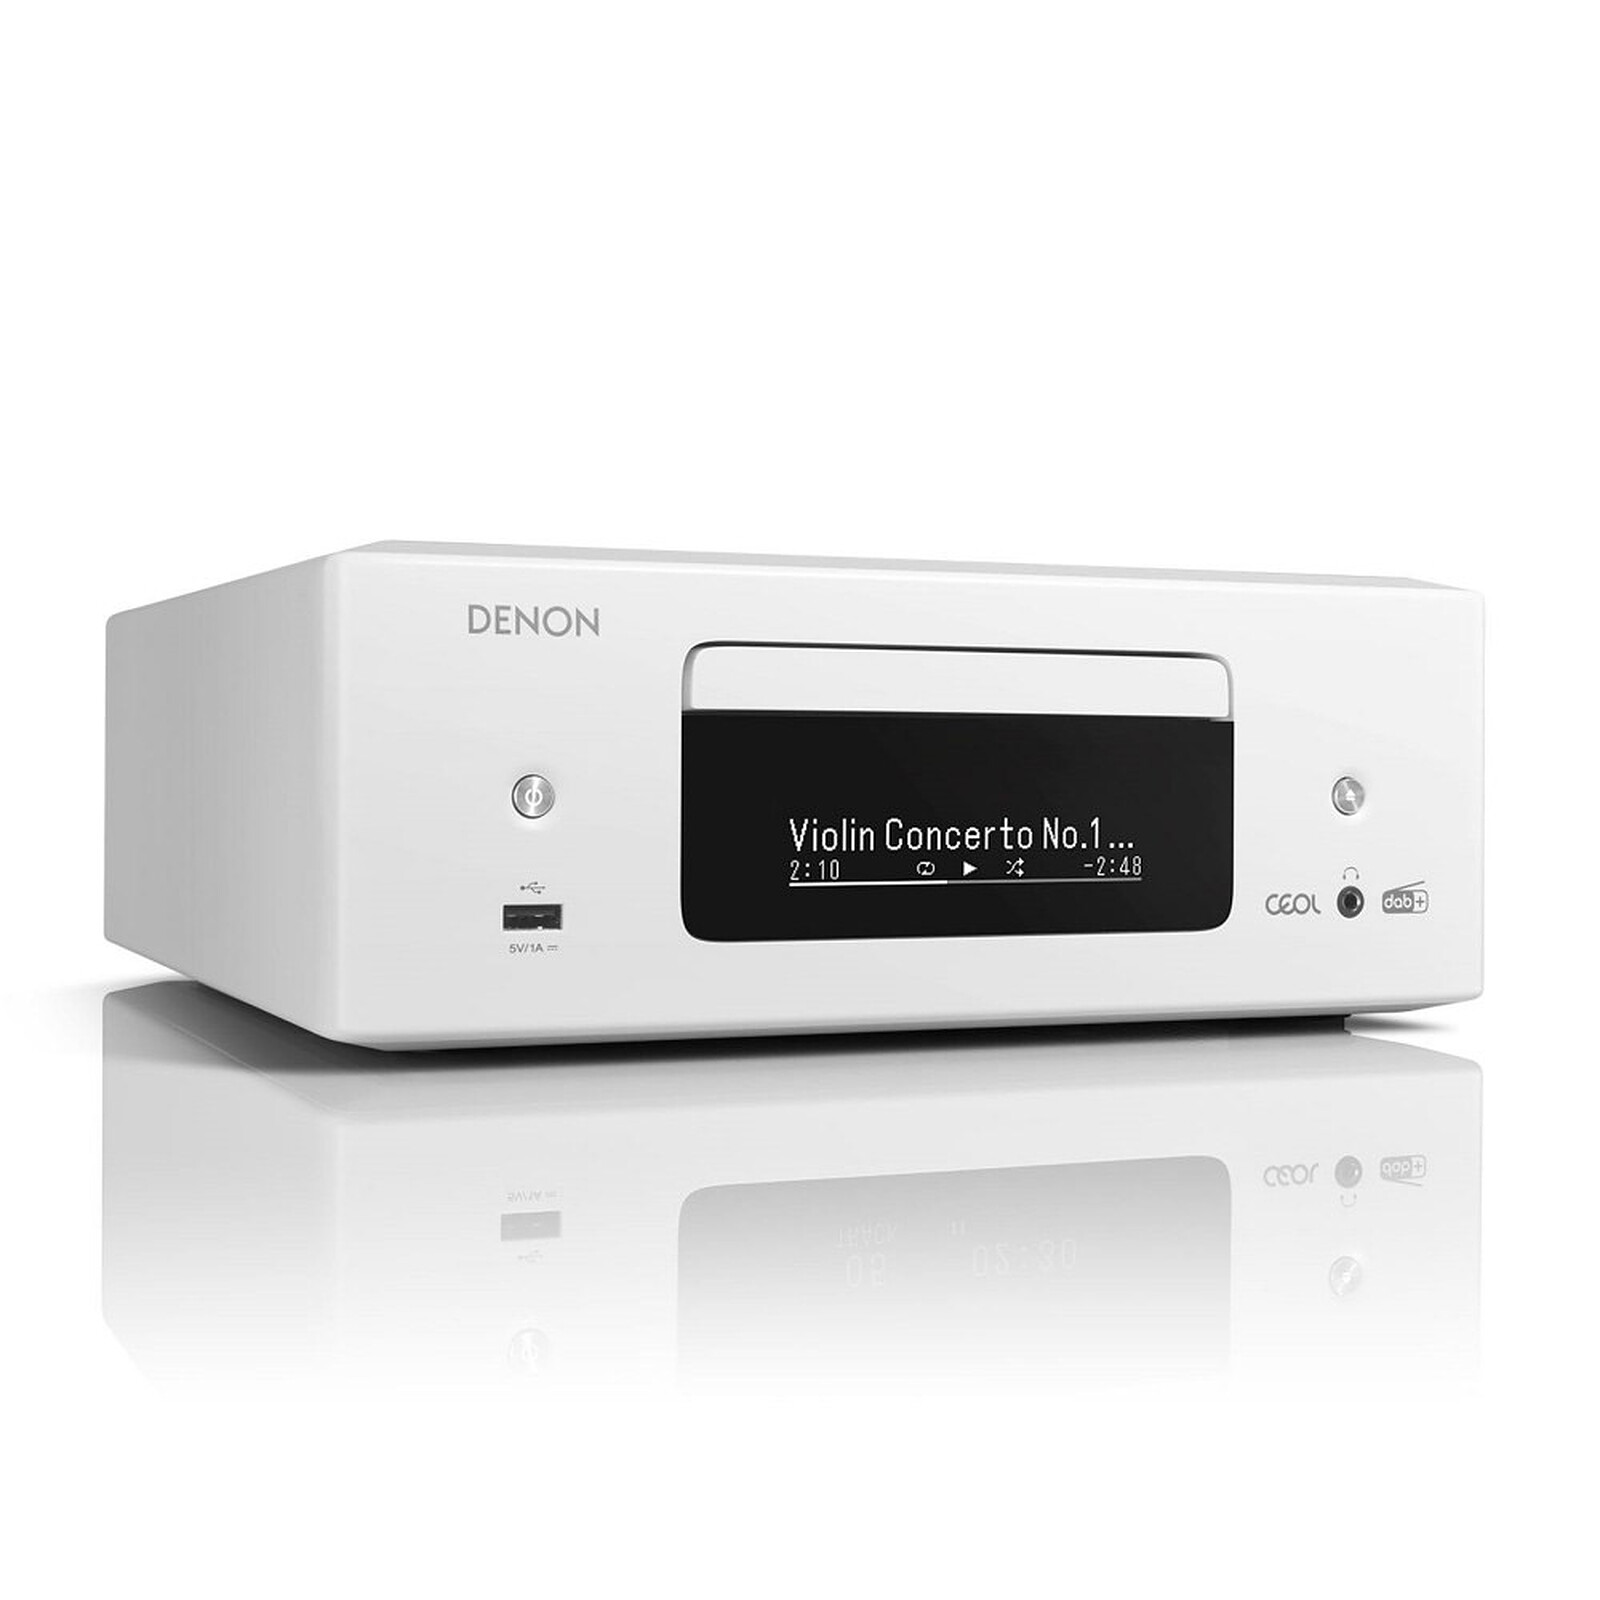 LDLC Denon RCD-N12DAB 3-year Home White - system - warranty audio